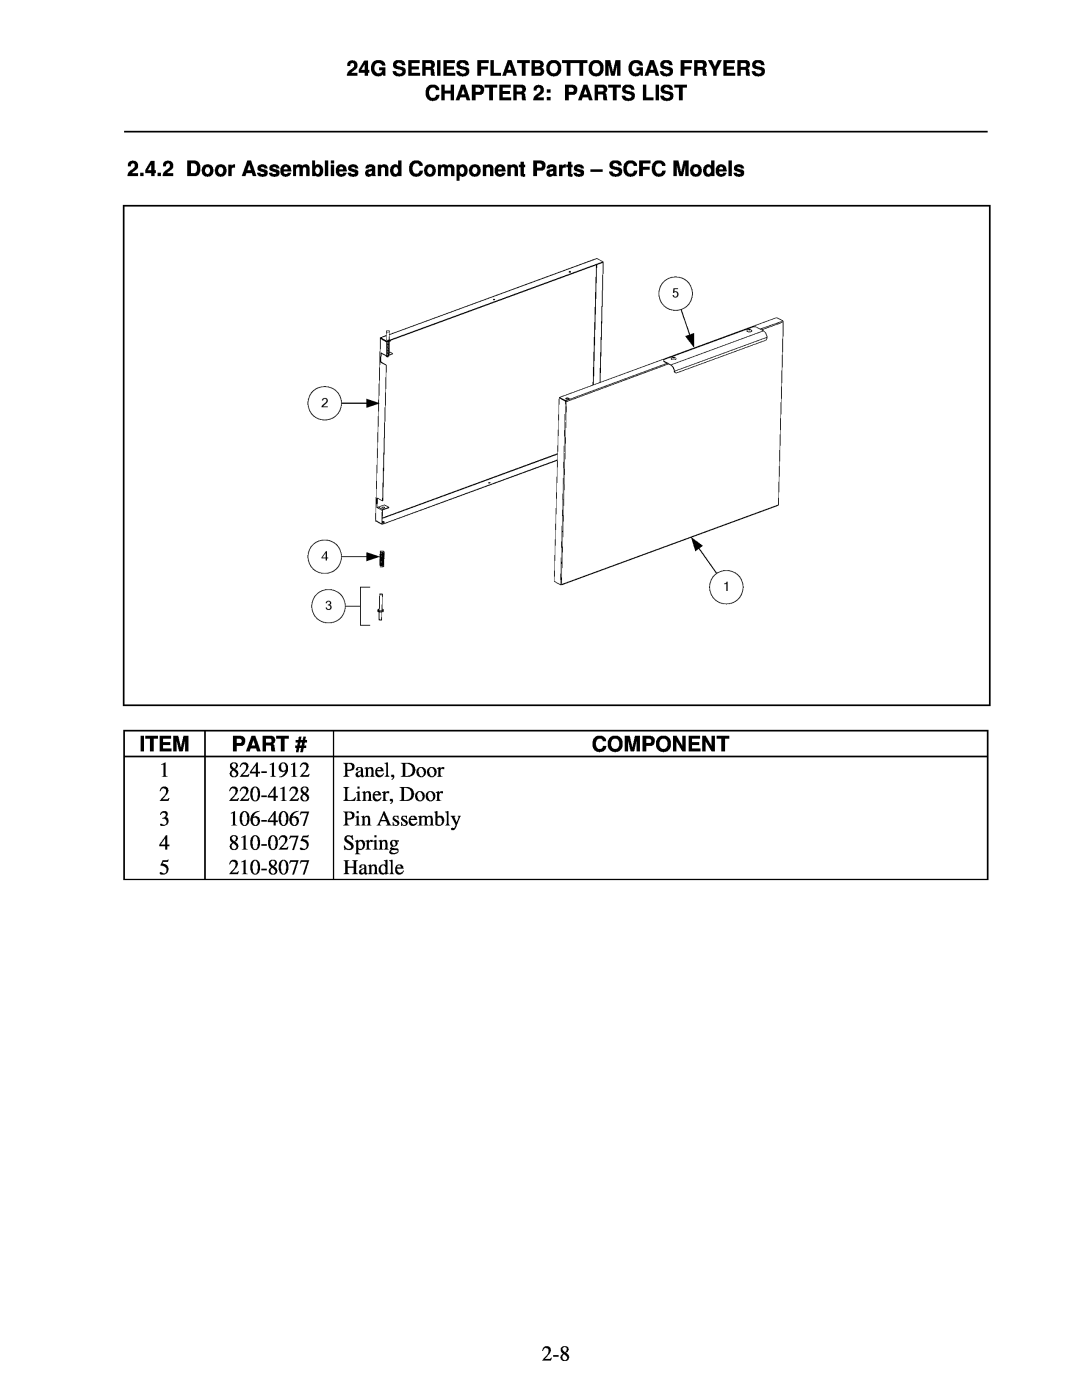 Frymaster 1824/2424G manual Door Assemblies and Component Parts - SCFC Models, 24G SERIES FLATBOTTOM GAS FRYERS PARTS LIST 